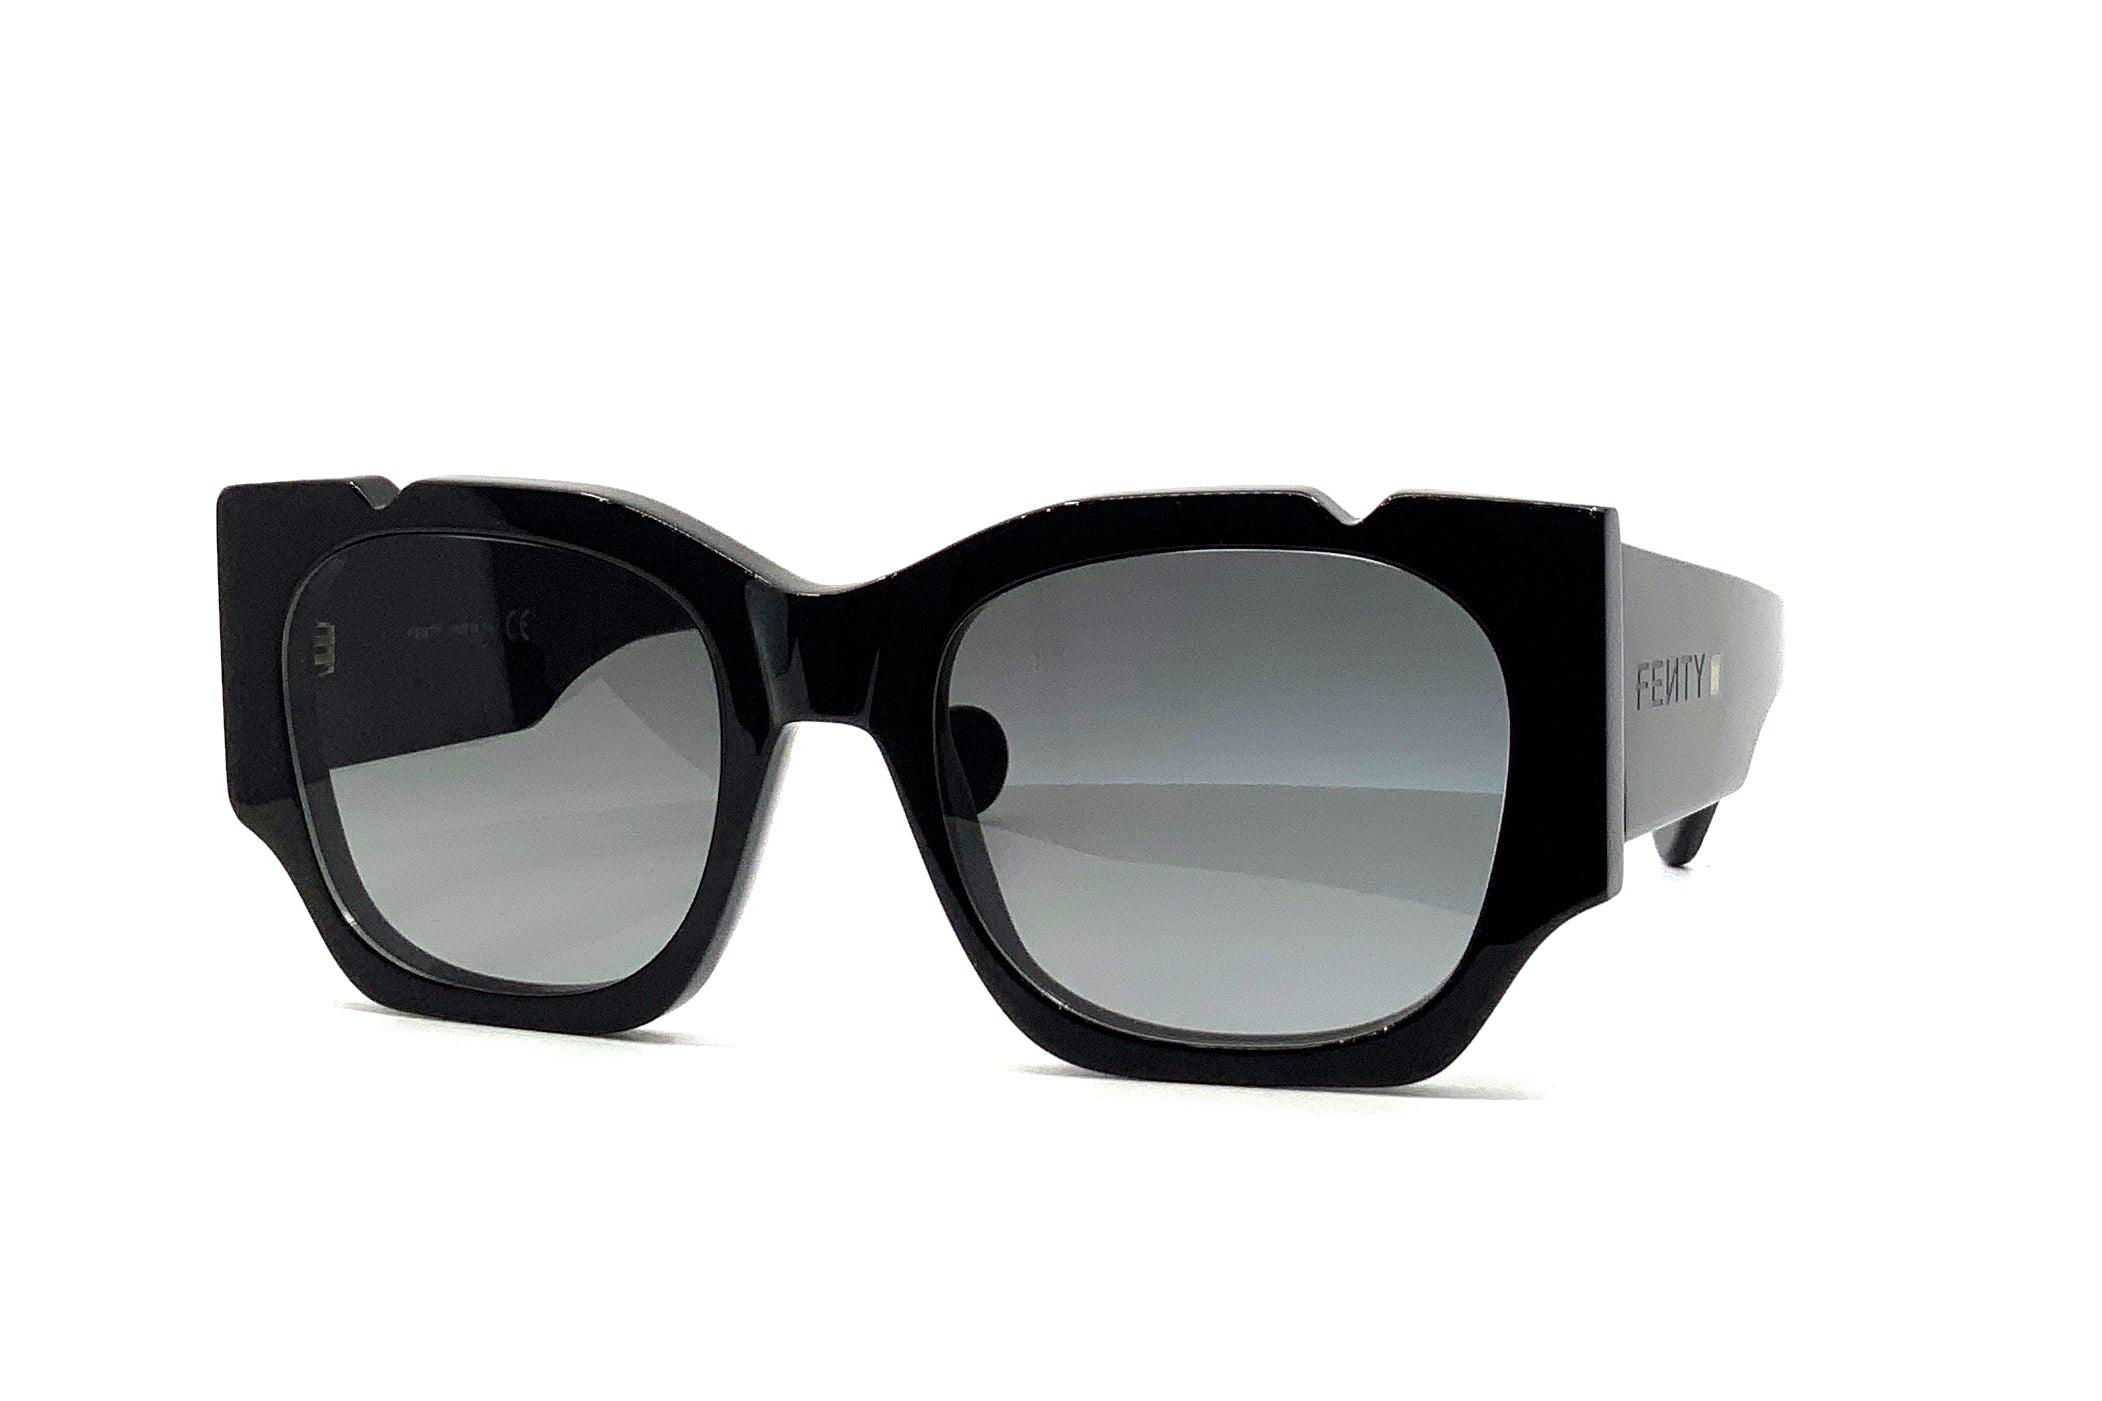 Fenty - Rectangular Sunglasses (Black)